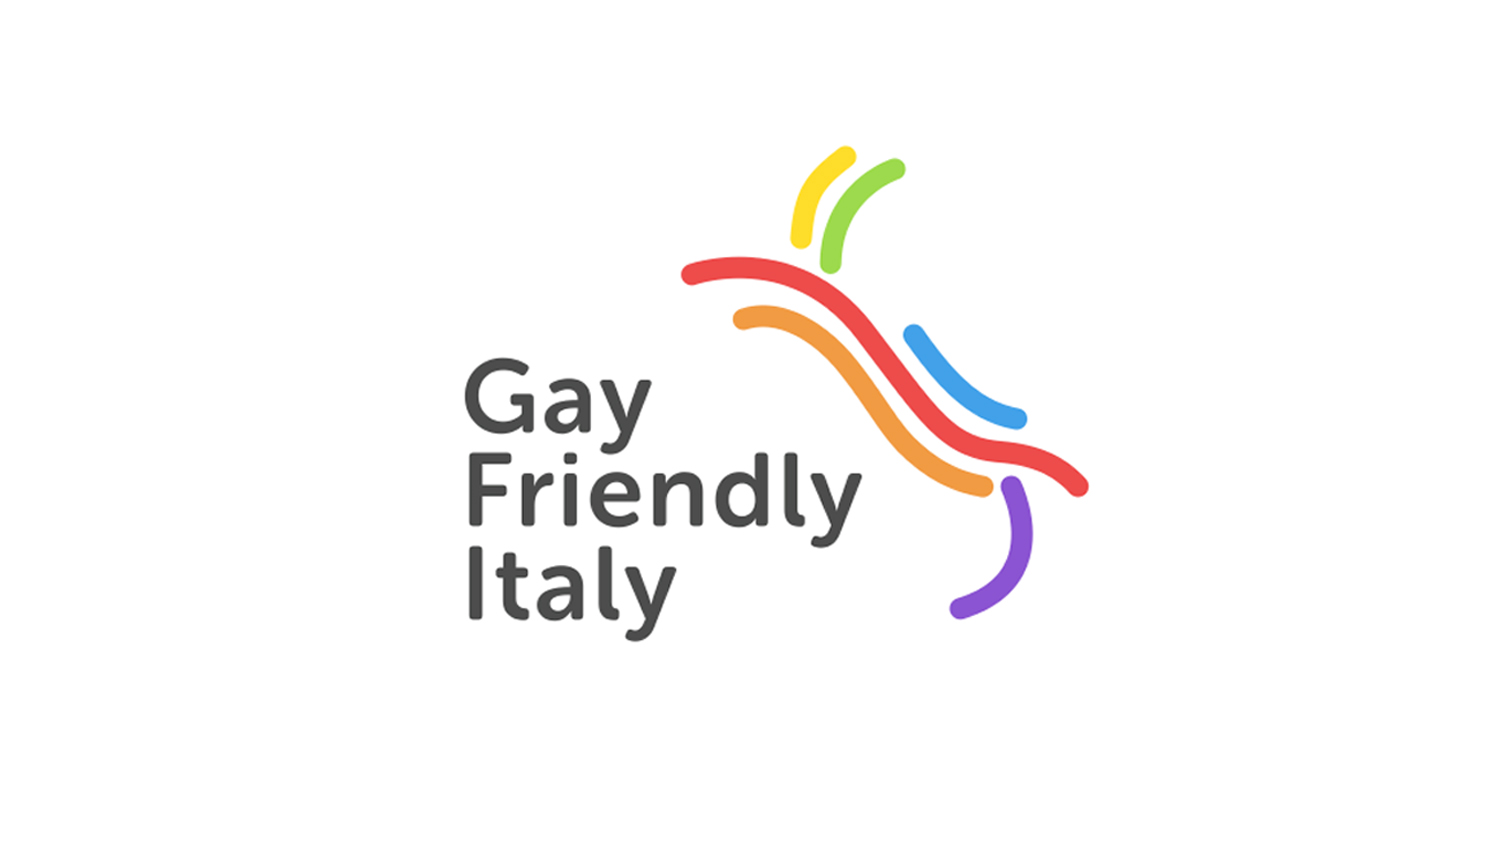 https://gnetwork360.com/2022/buenosaires/wp-content/uploads/2022/10/SPONSORS-G360-BUE-2022-GAYFRIENDLY-ITALY.jpg